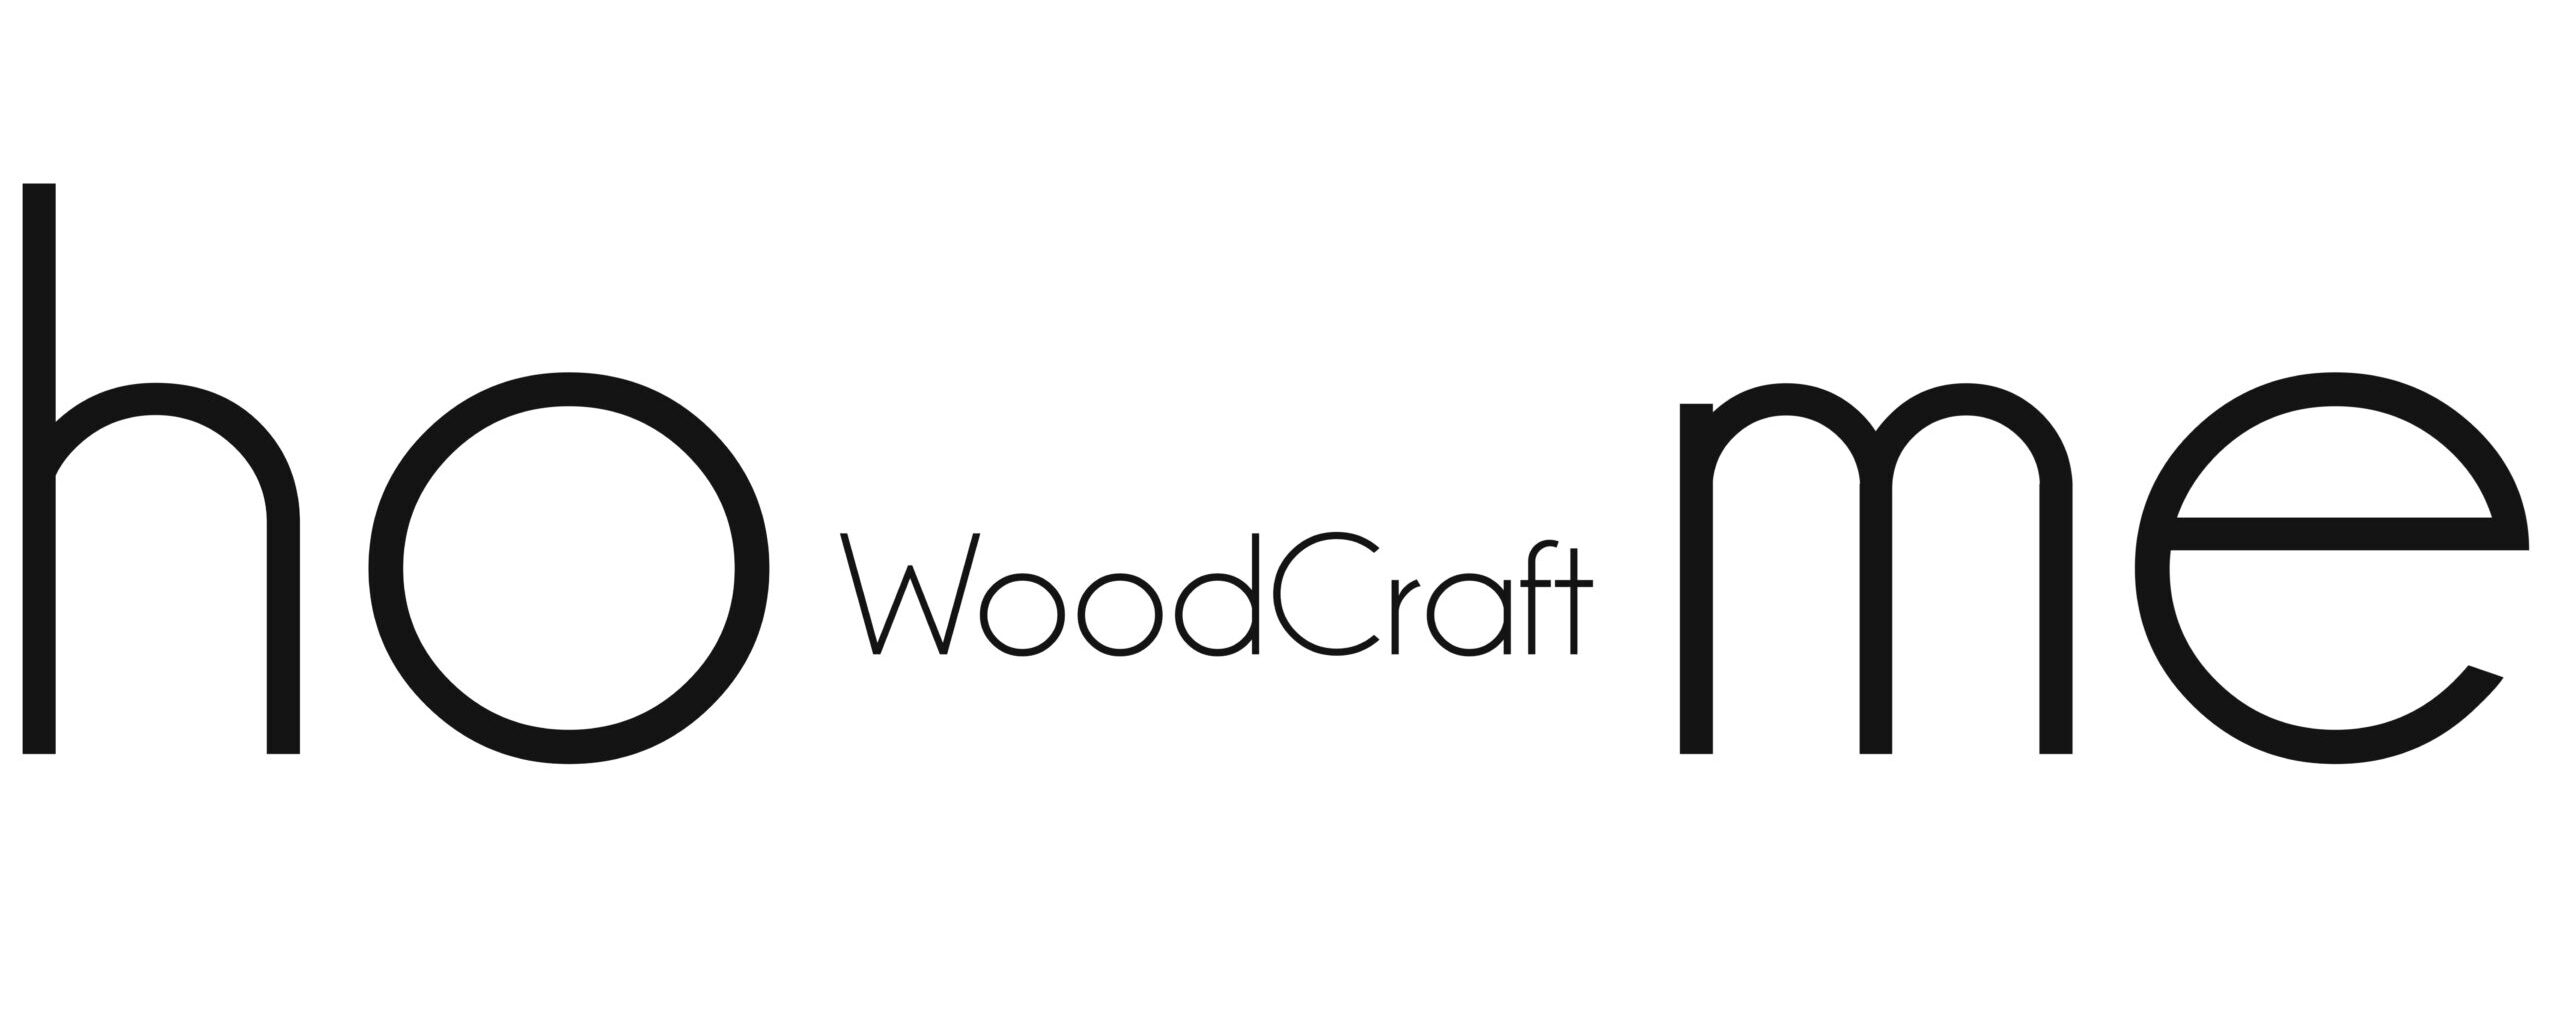 woodcraft logo